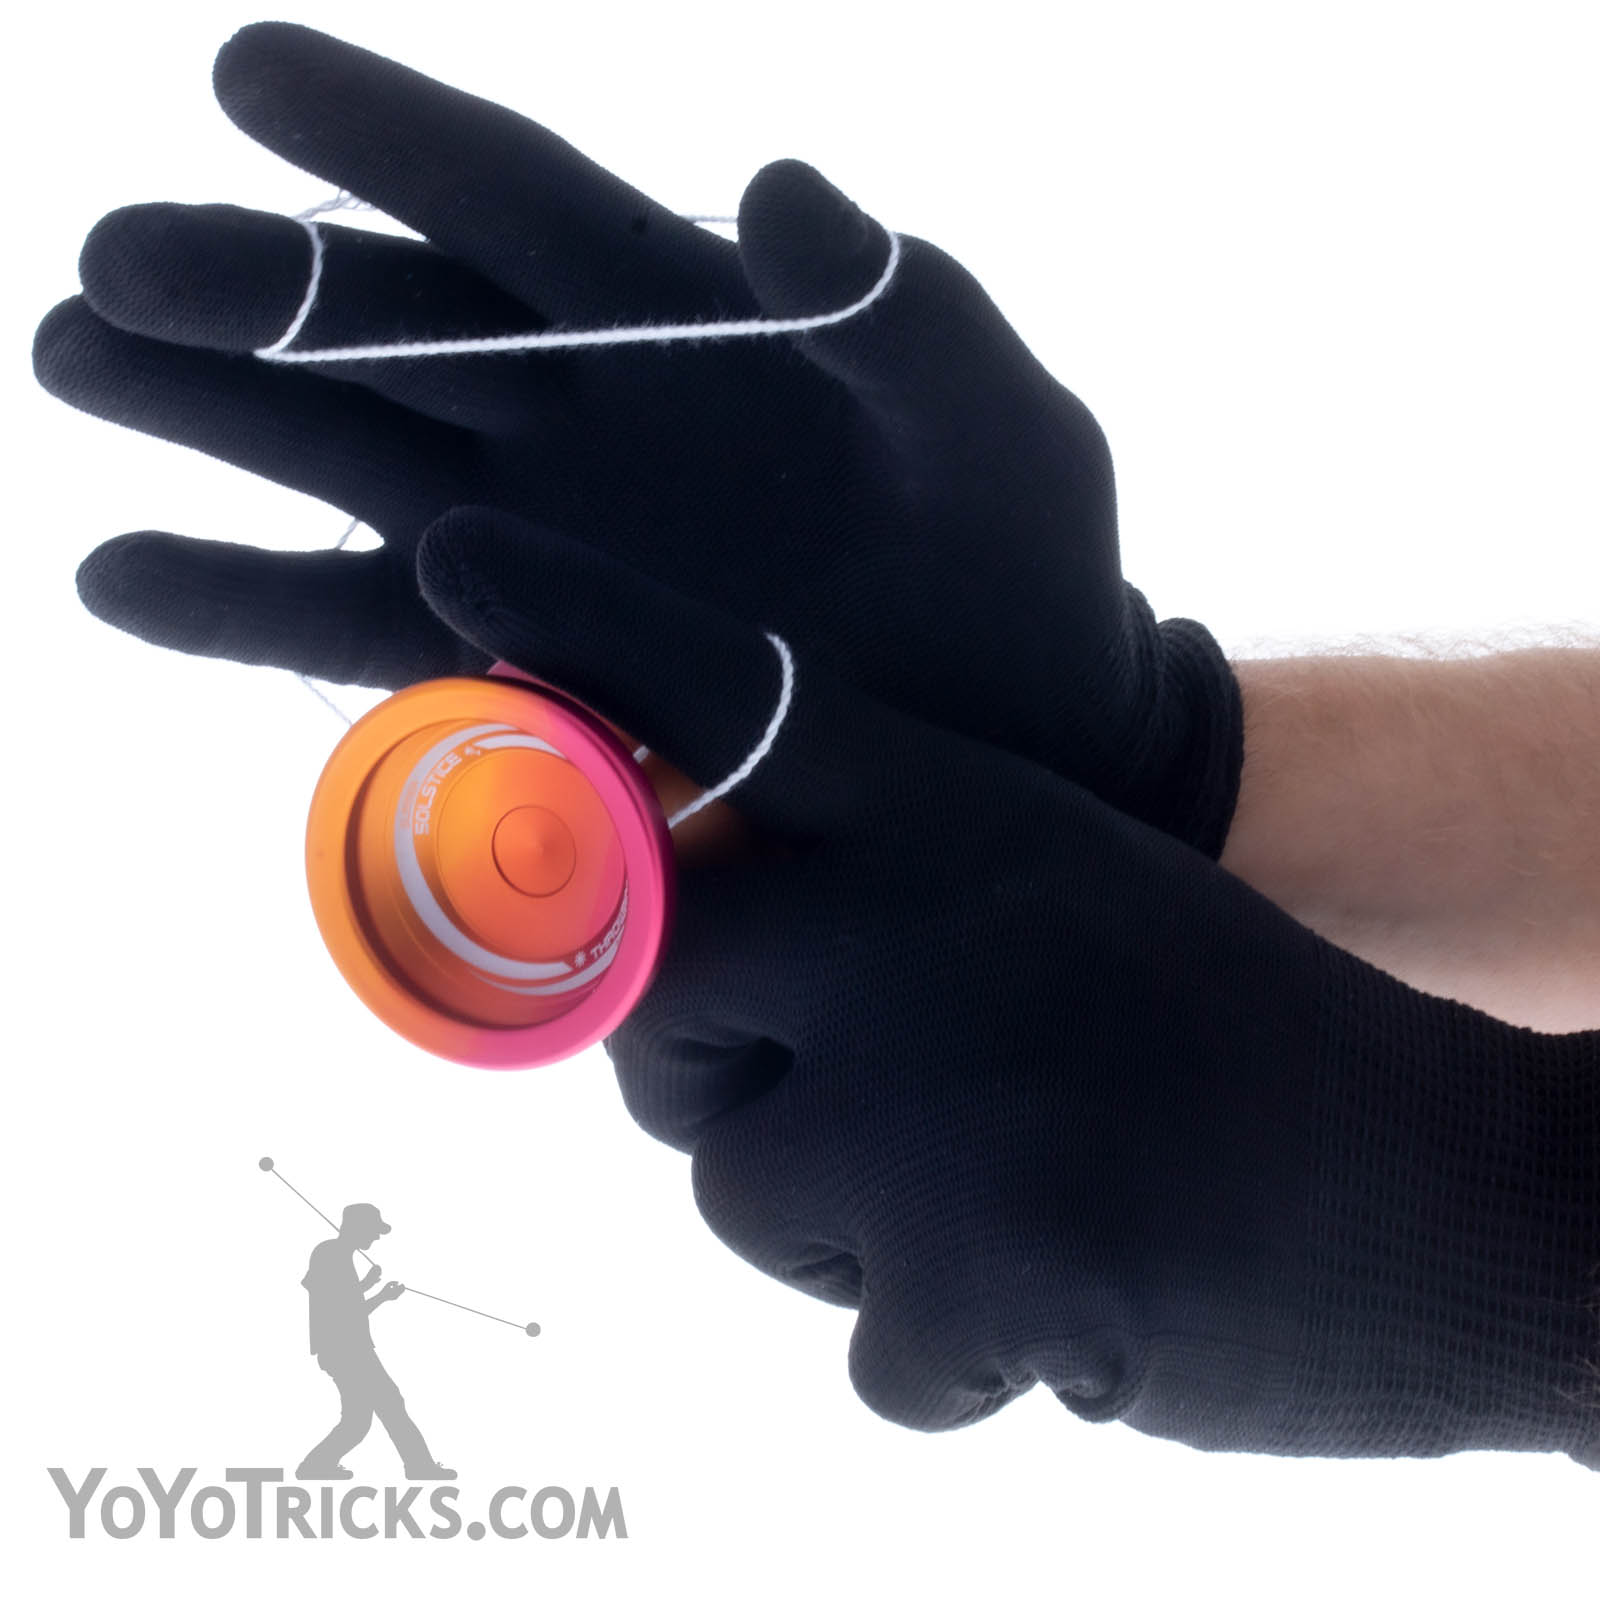 inkl Yo-Yo Oel und Fingerprotector 7 Ersatzschnüre Yoyo Velocity Starter SET 